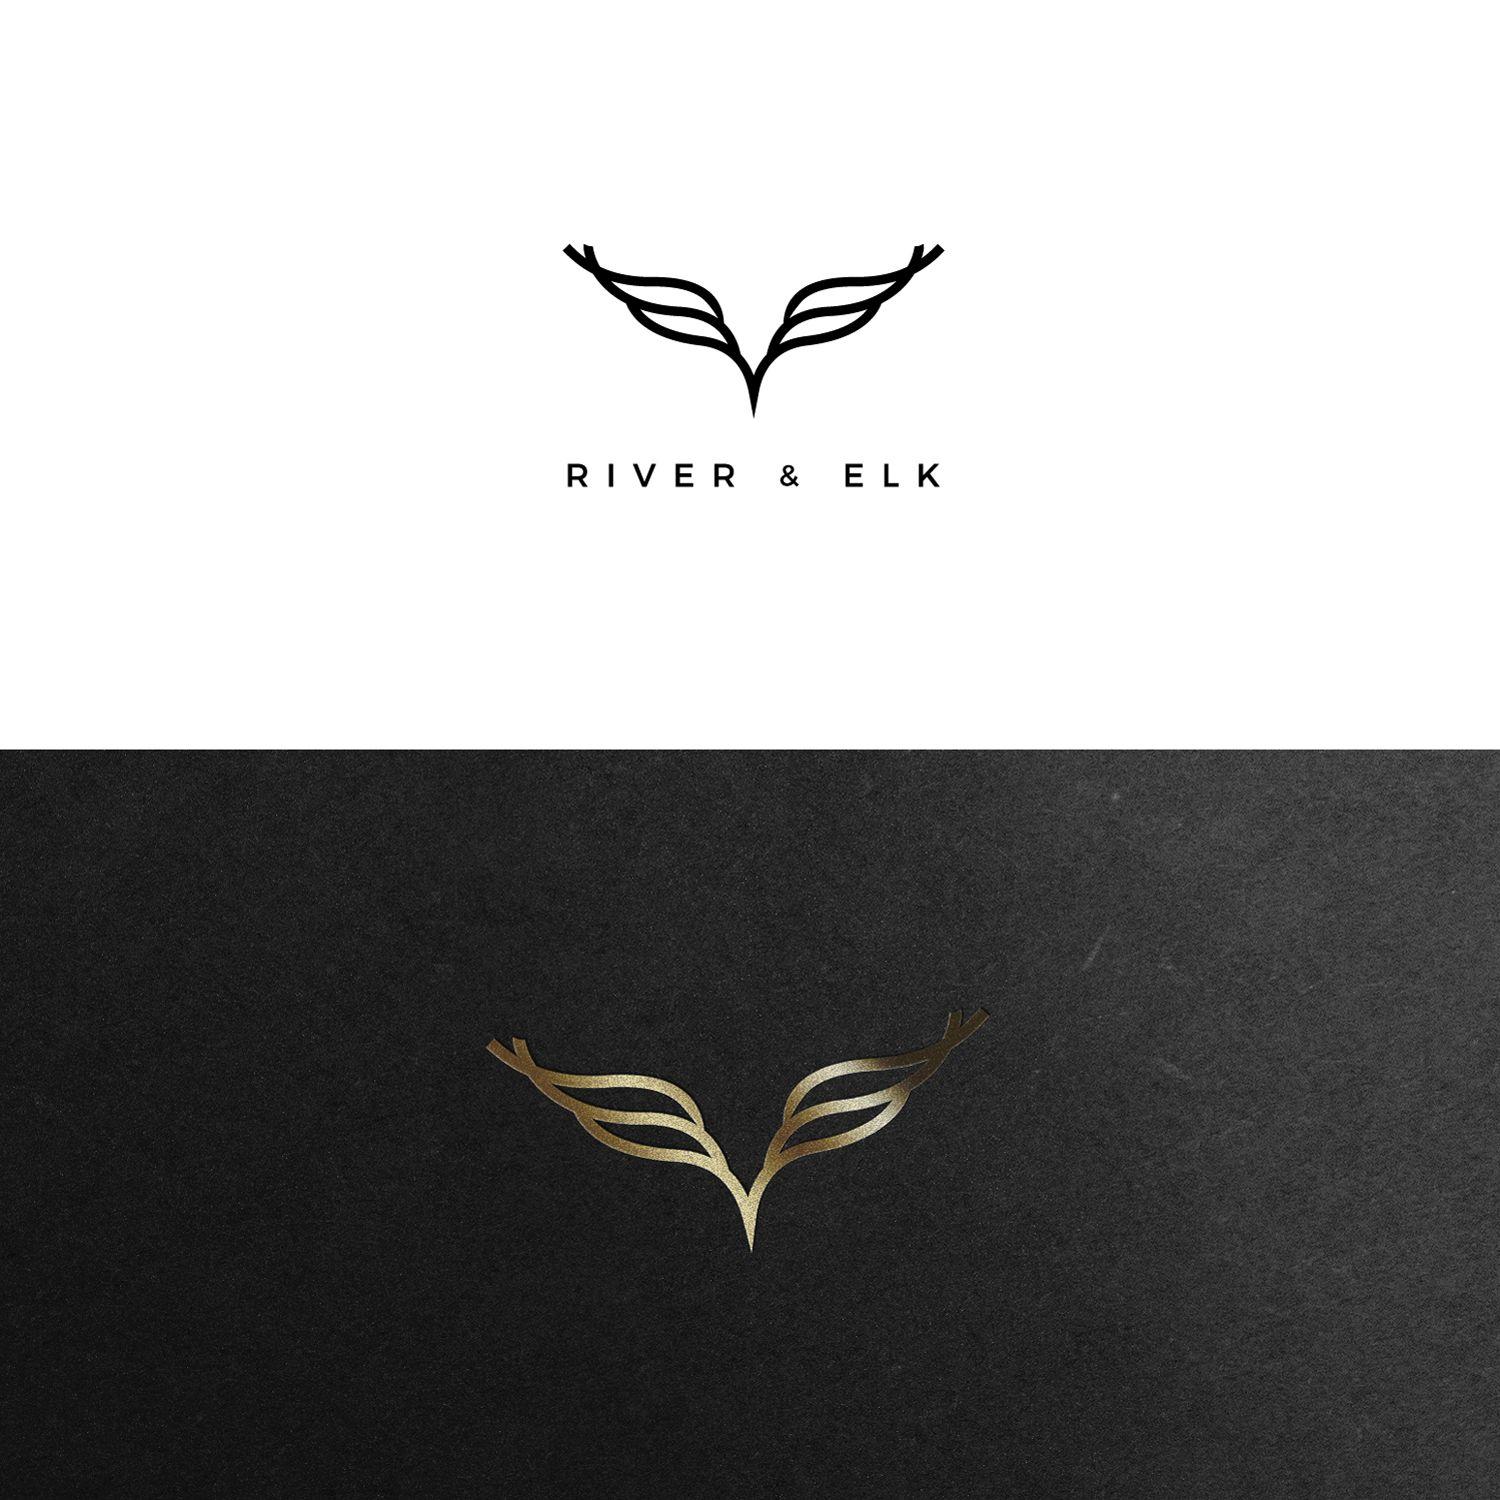 River Bird Logo - Upmarket, Serious, Home Furnishing Logo Design for RIVER & ELK